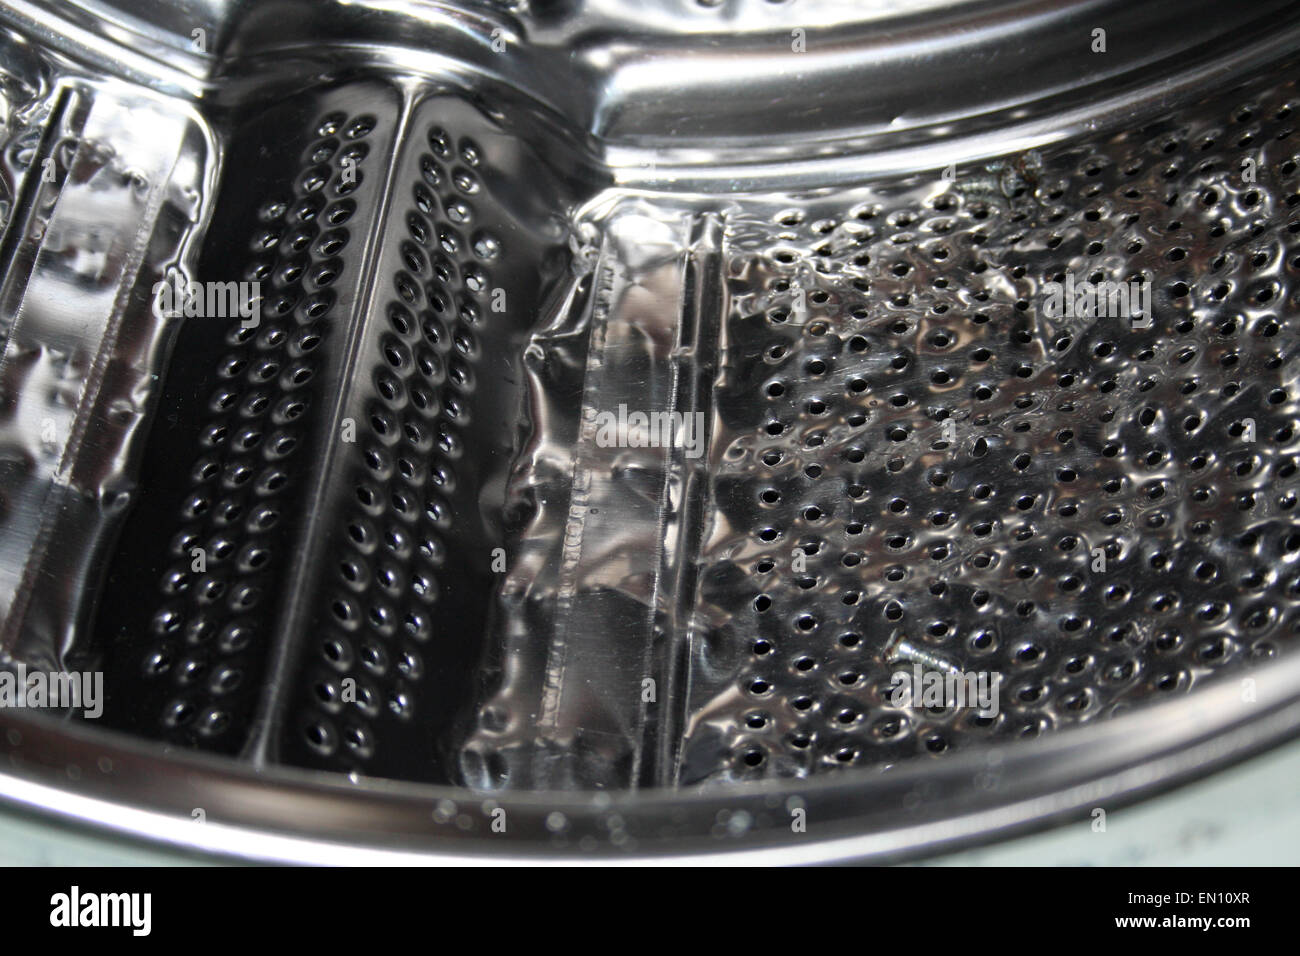 Close-up of a damaged washing machine drum. Stock Photo